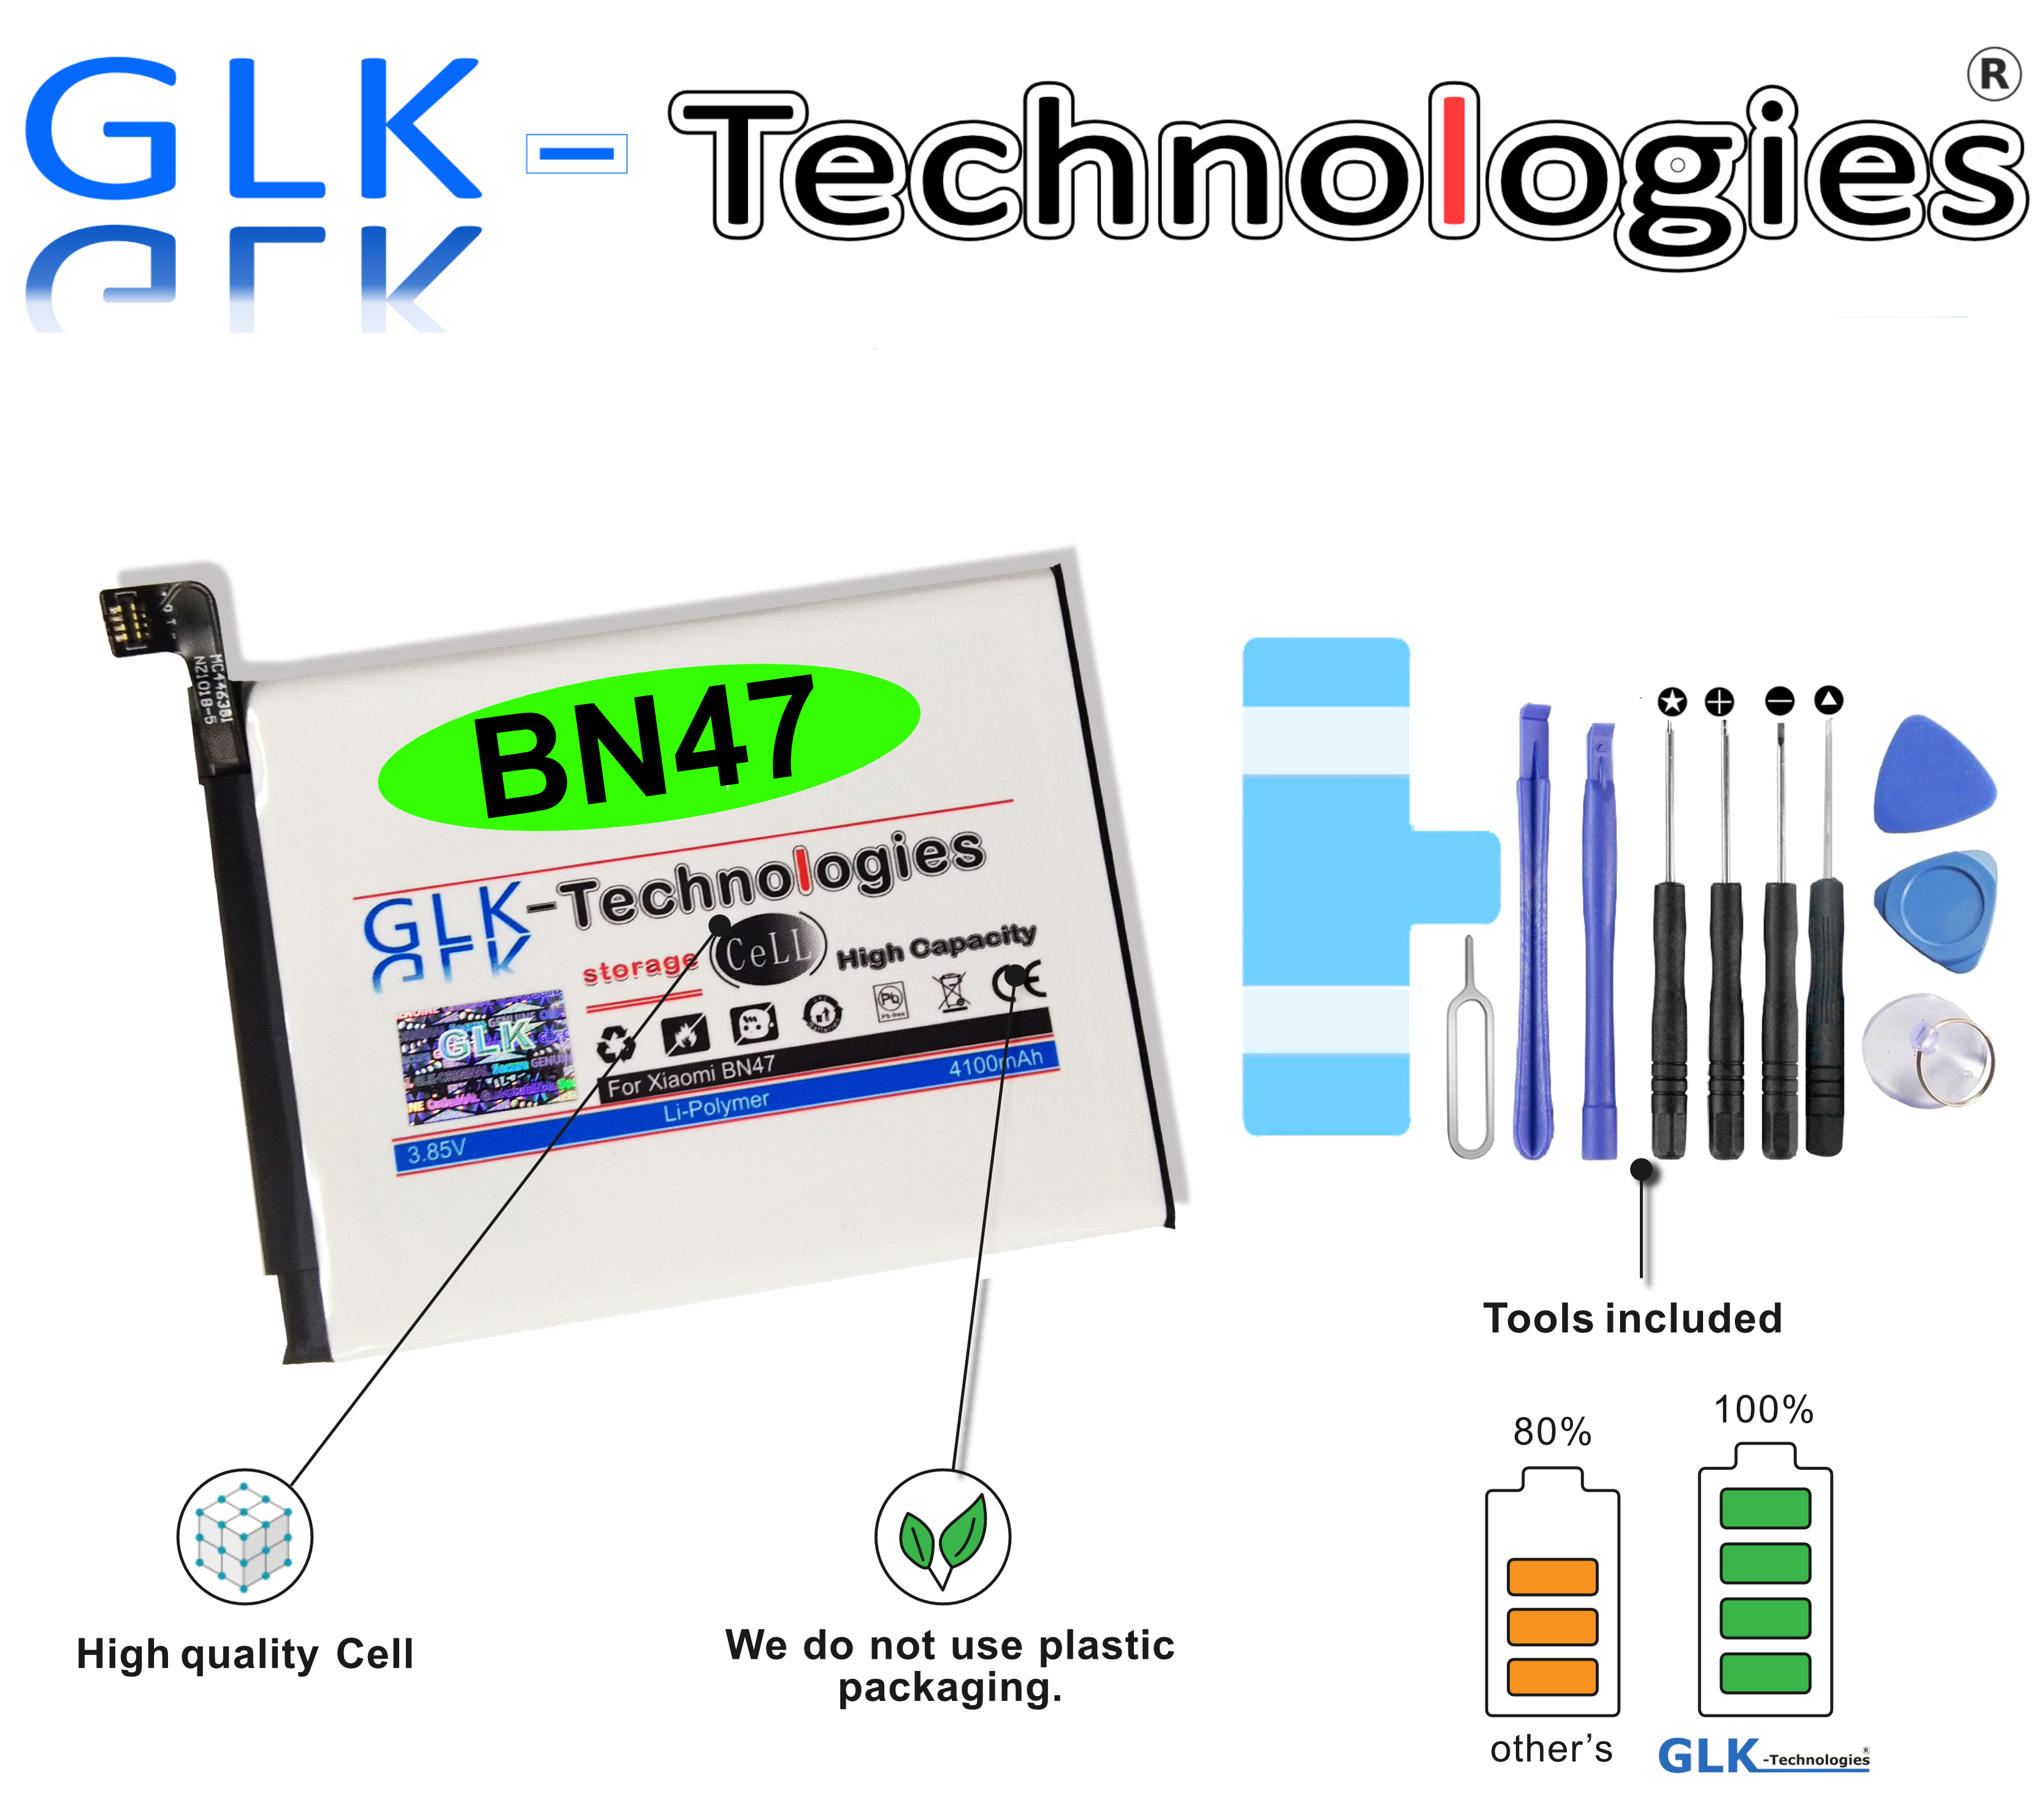 Pro Li-Ion High Power Akku 4100 GLK-TECHNOLOGIES RedMi Ersatz Mi Ersatz für Akku Xiaomi inkl. Lite Werkzeug Smartphone mAh Battery A2 6 BN47